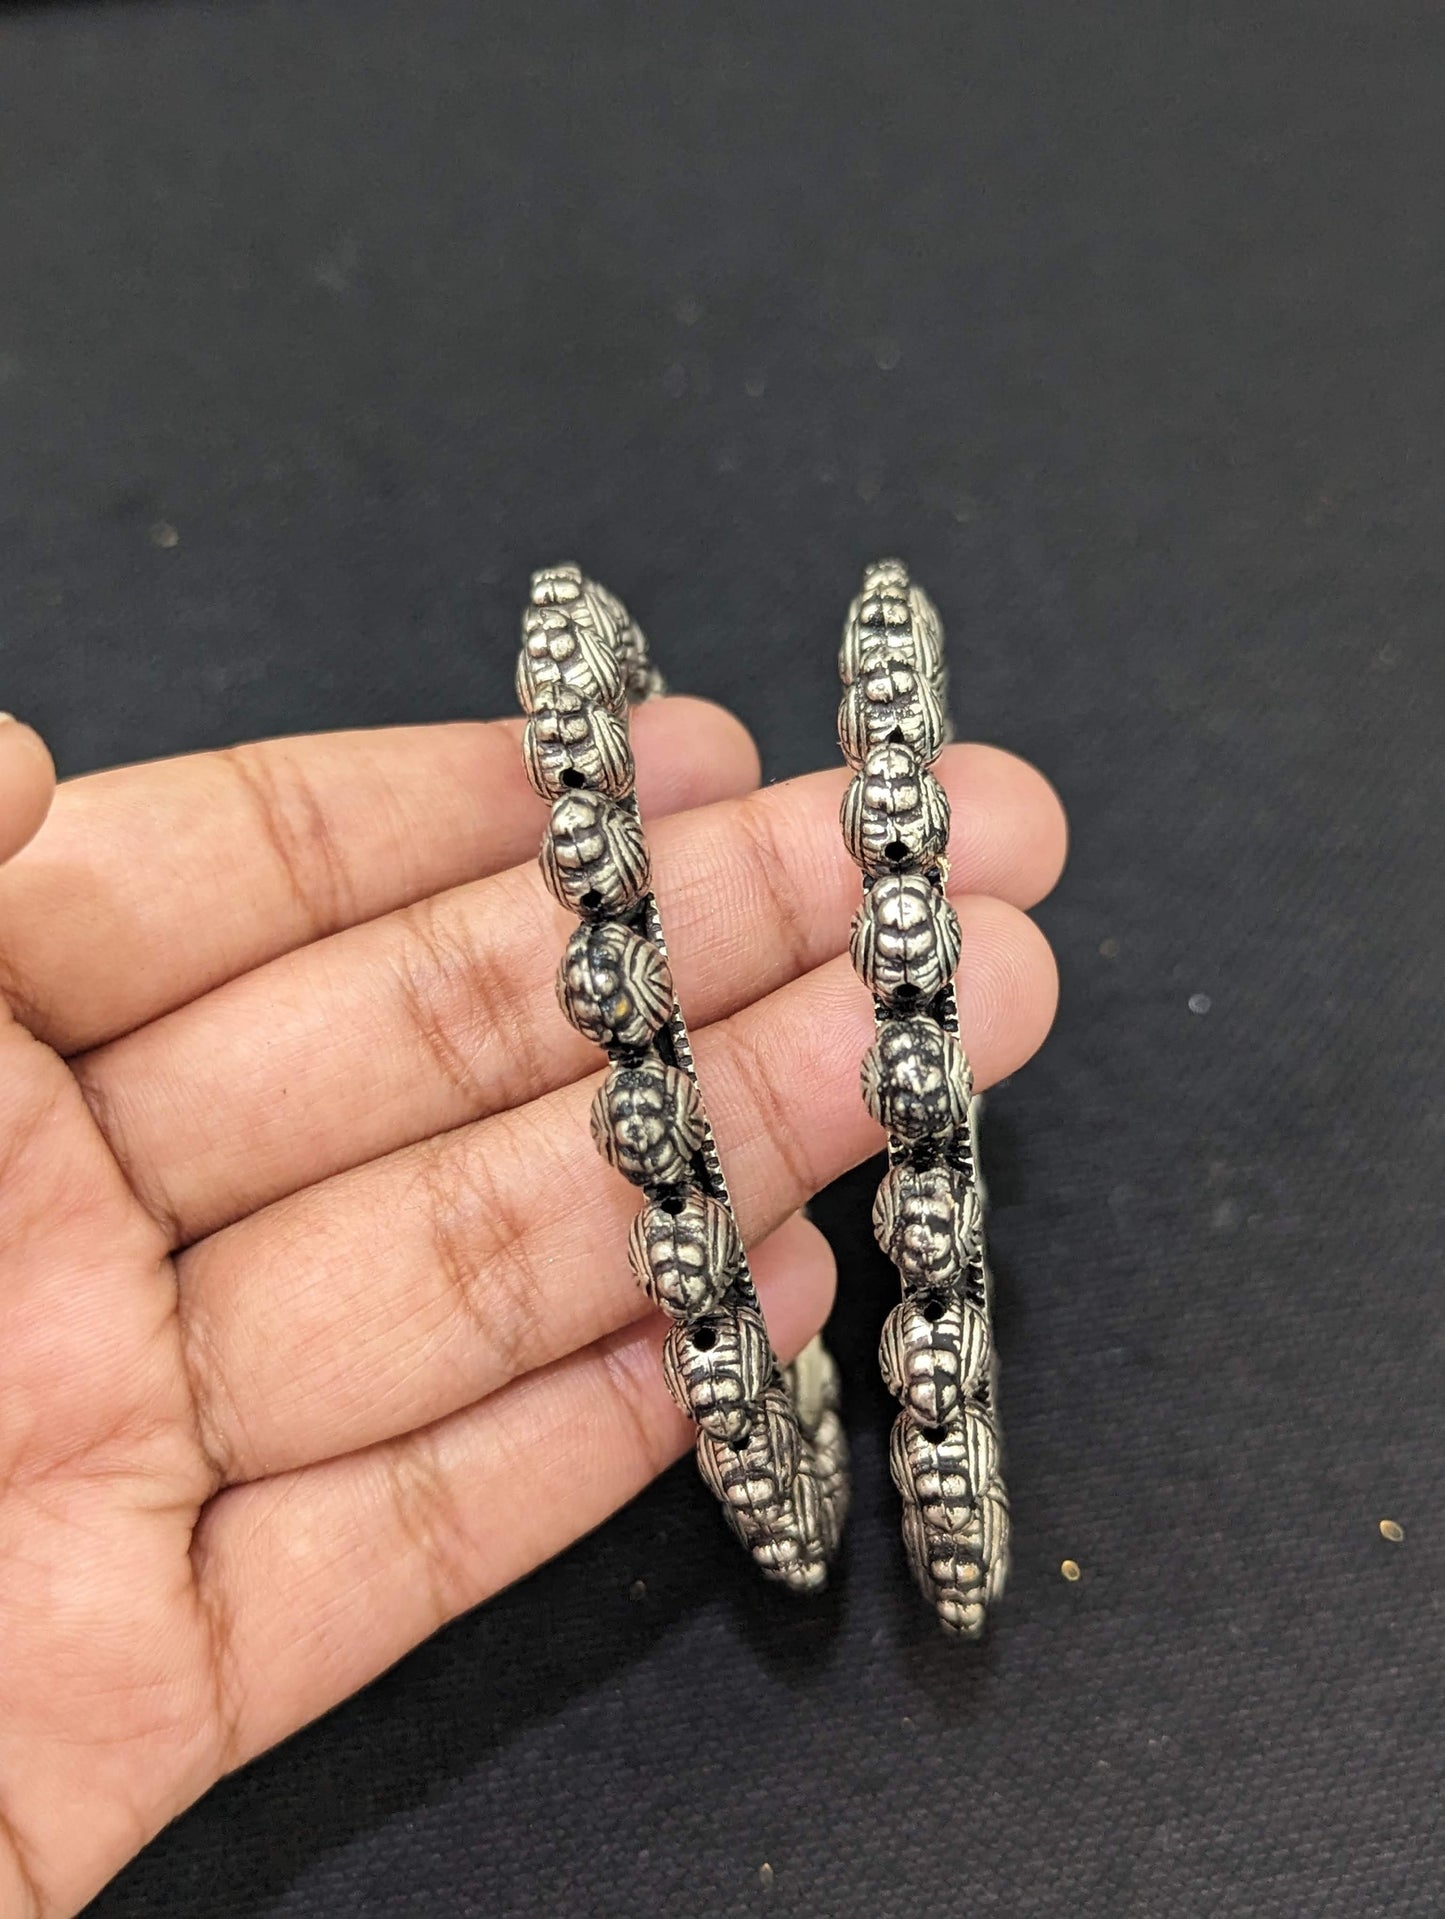 Oxidized silver pair bangles - Triangle design